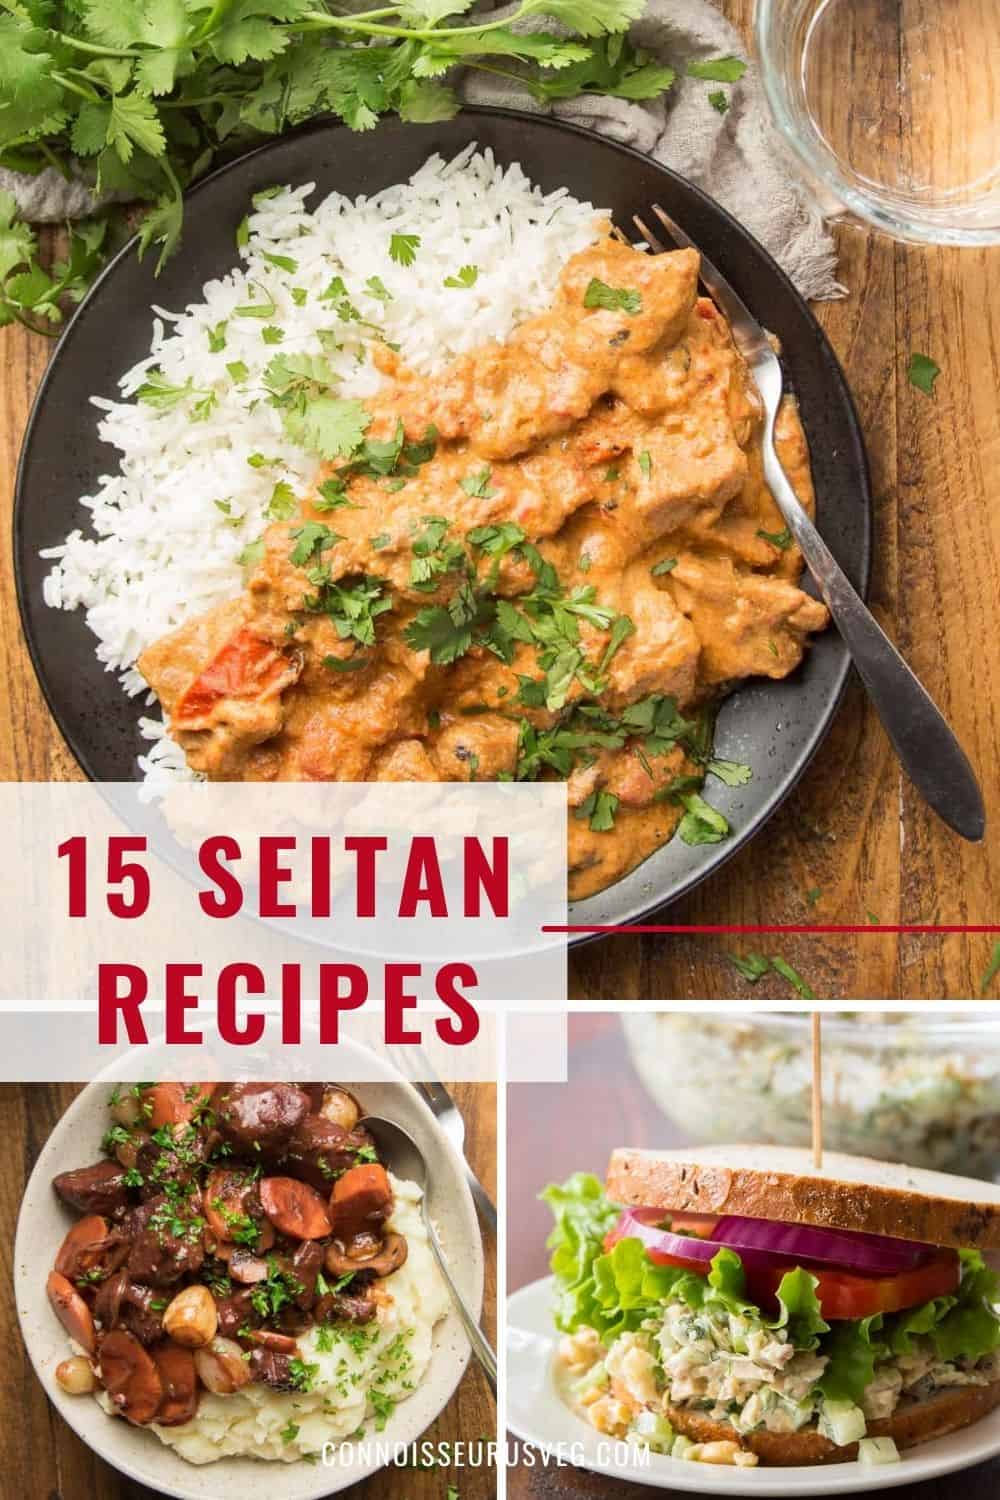 Collage of Seitan Dishes with text overlay reading "Seitan Recipes".